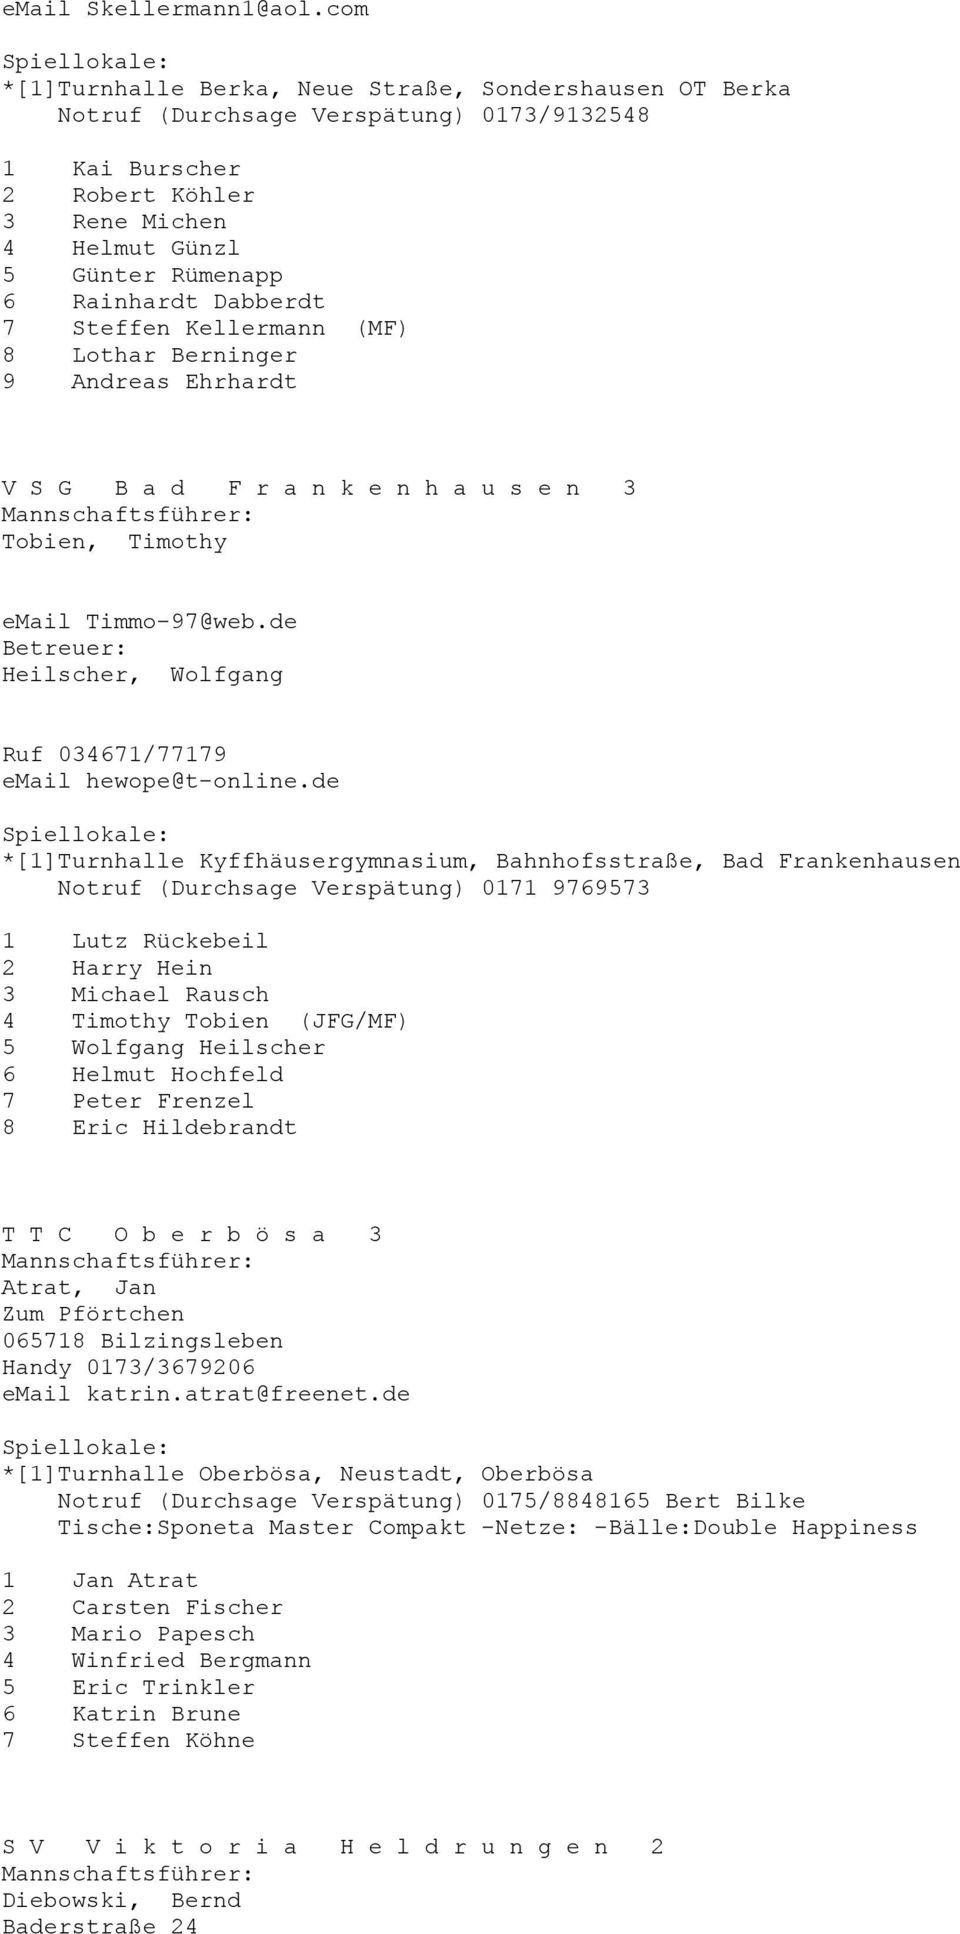 Dabberdt 7 Steffen Kellermann (MF) 8 Lothar Berninger 9 Andreas Ehrhardt V S G B a d F r a n k e n h a u s e n 3 Tobien, Timothy email Timmo-97@web.